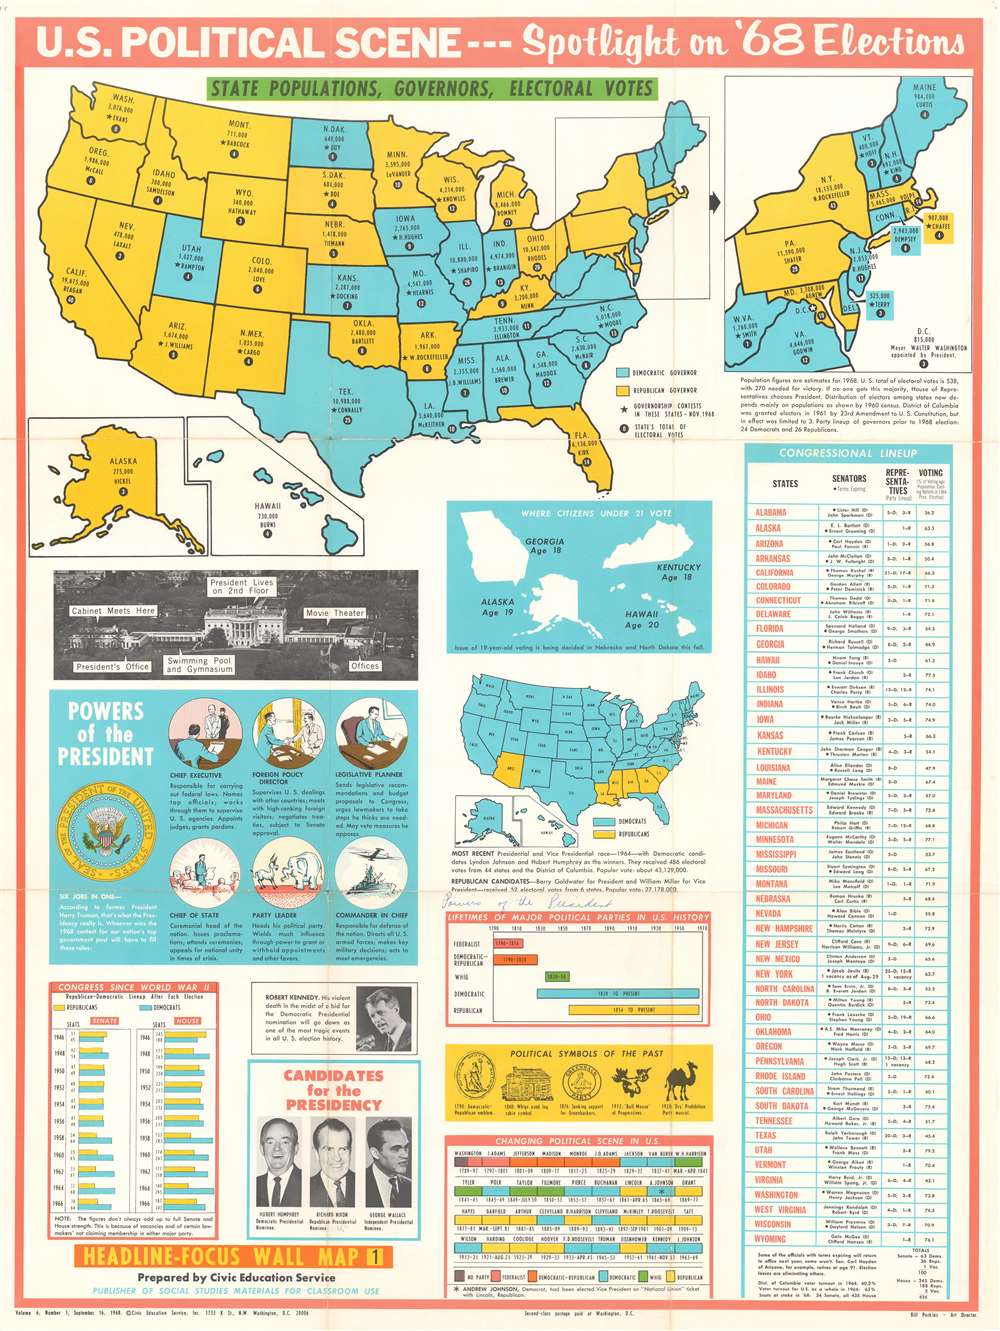 Headline Focus Wall Map 1. U.S. Political Scene - - Spotlight on '68 Elections. - Main View